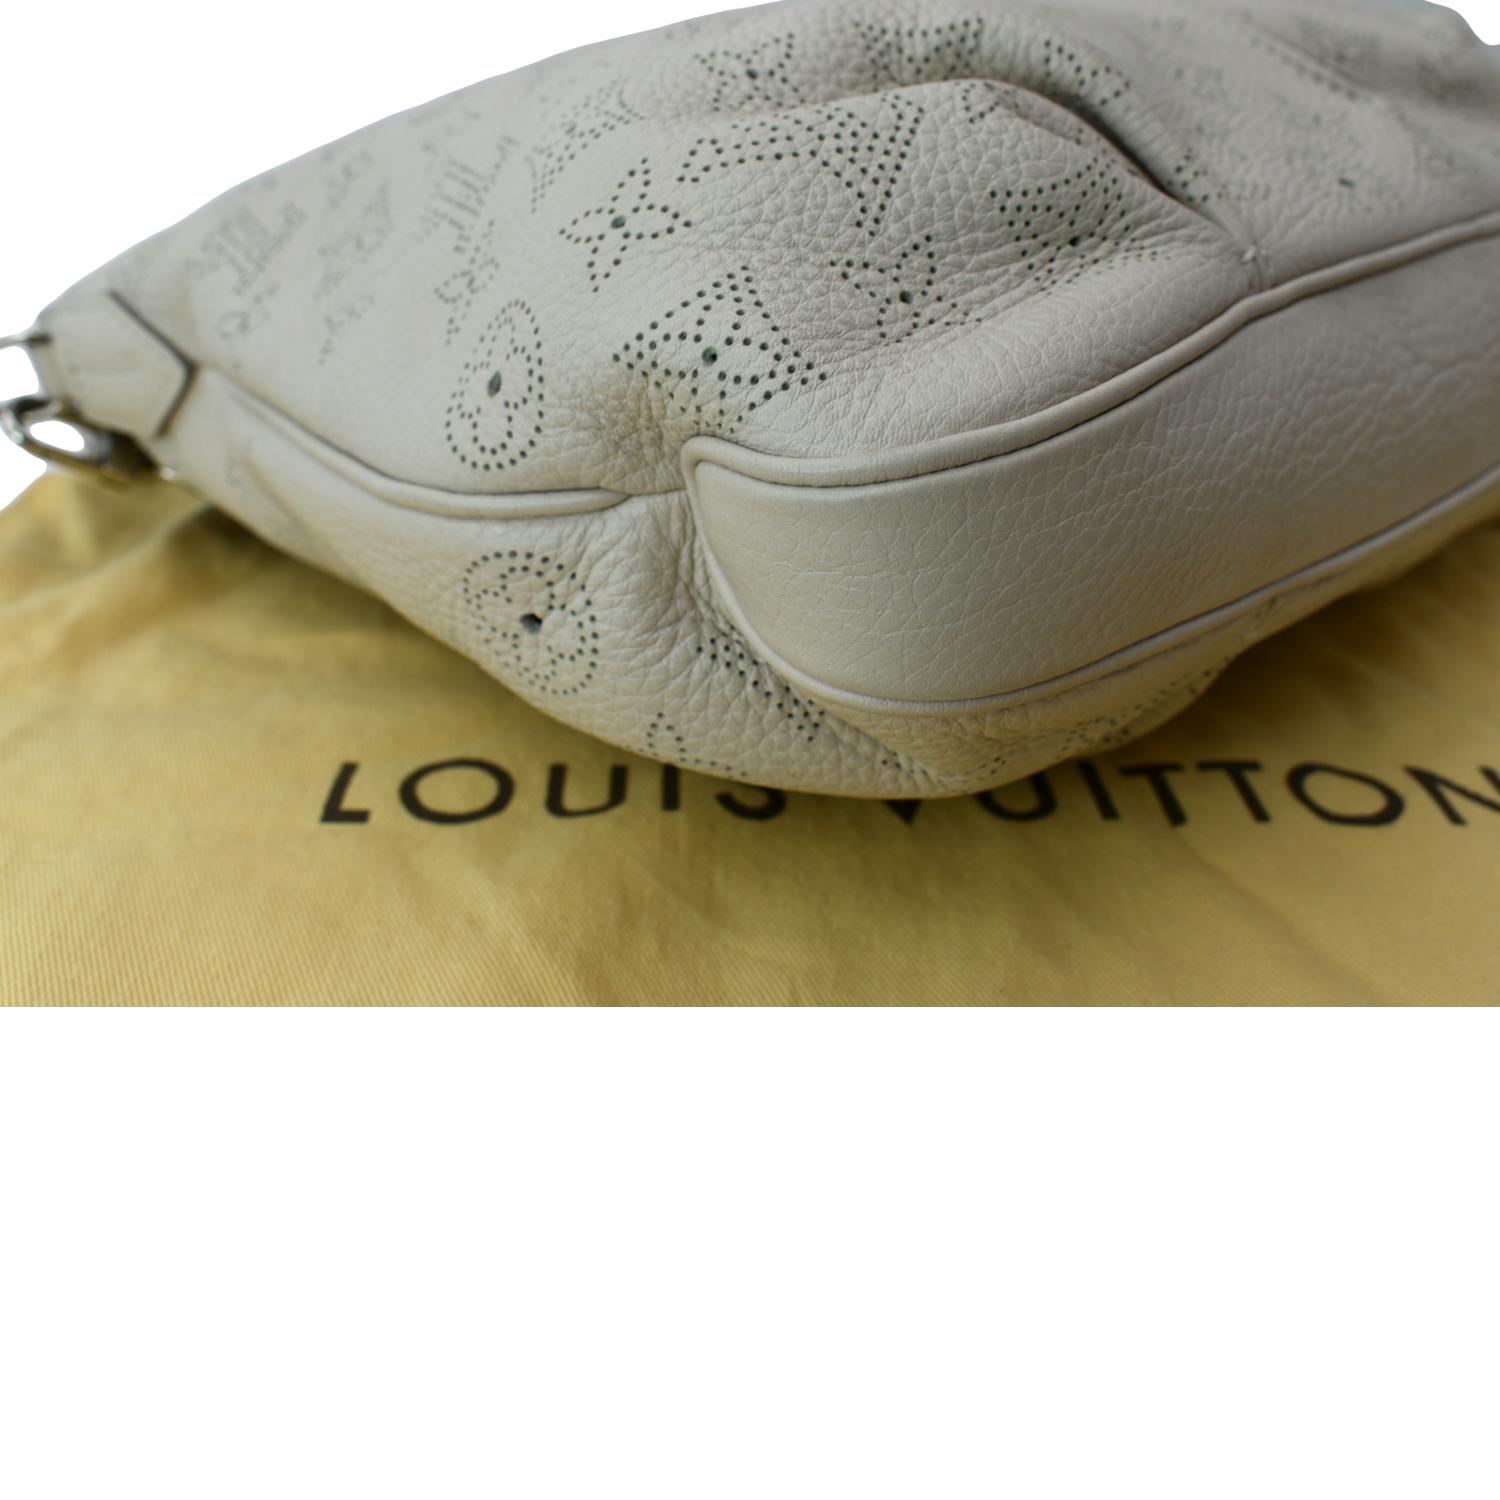 Louis Vuitton Pink Monogram Mahina Leather Selene PM Bag